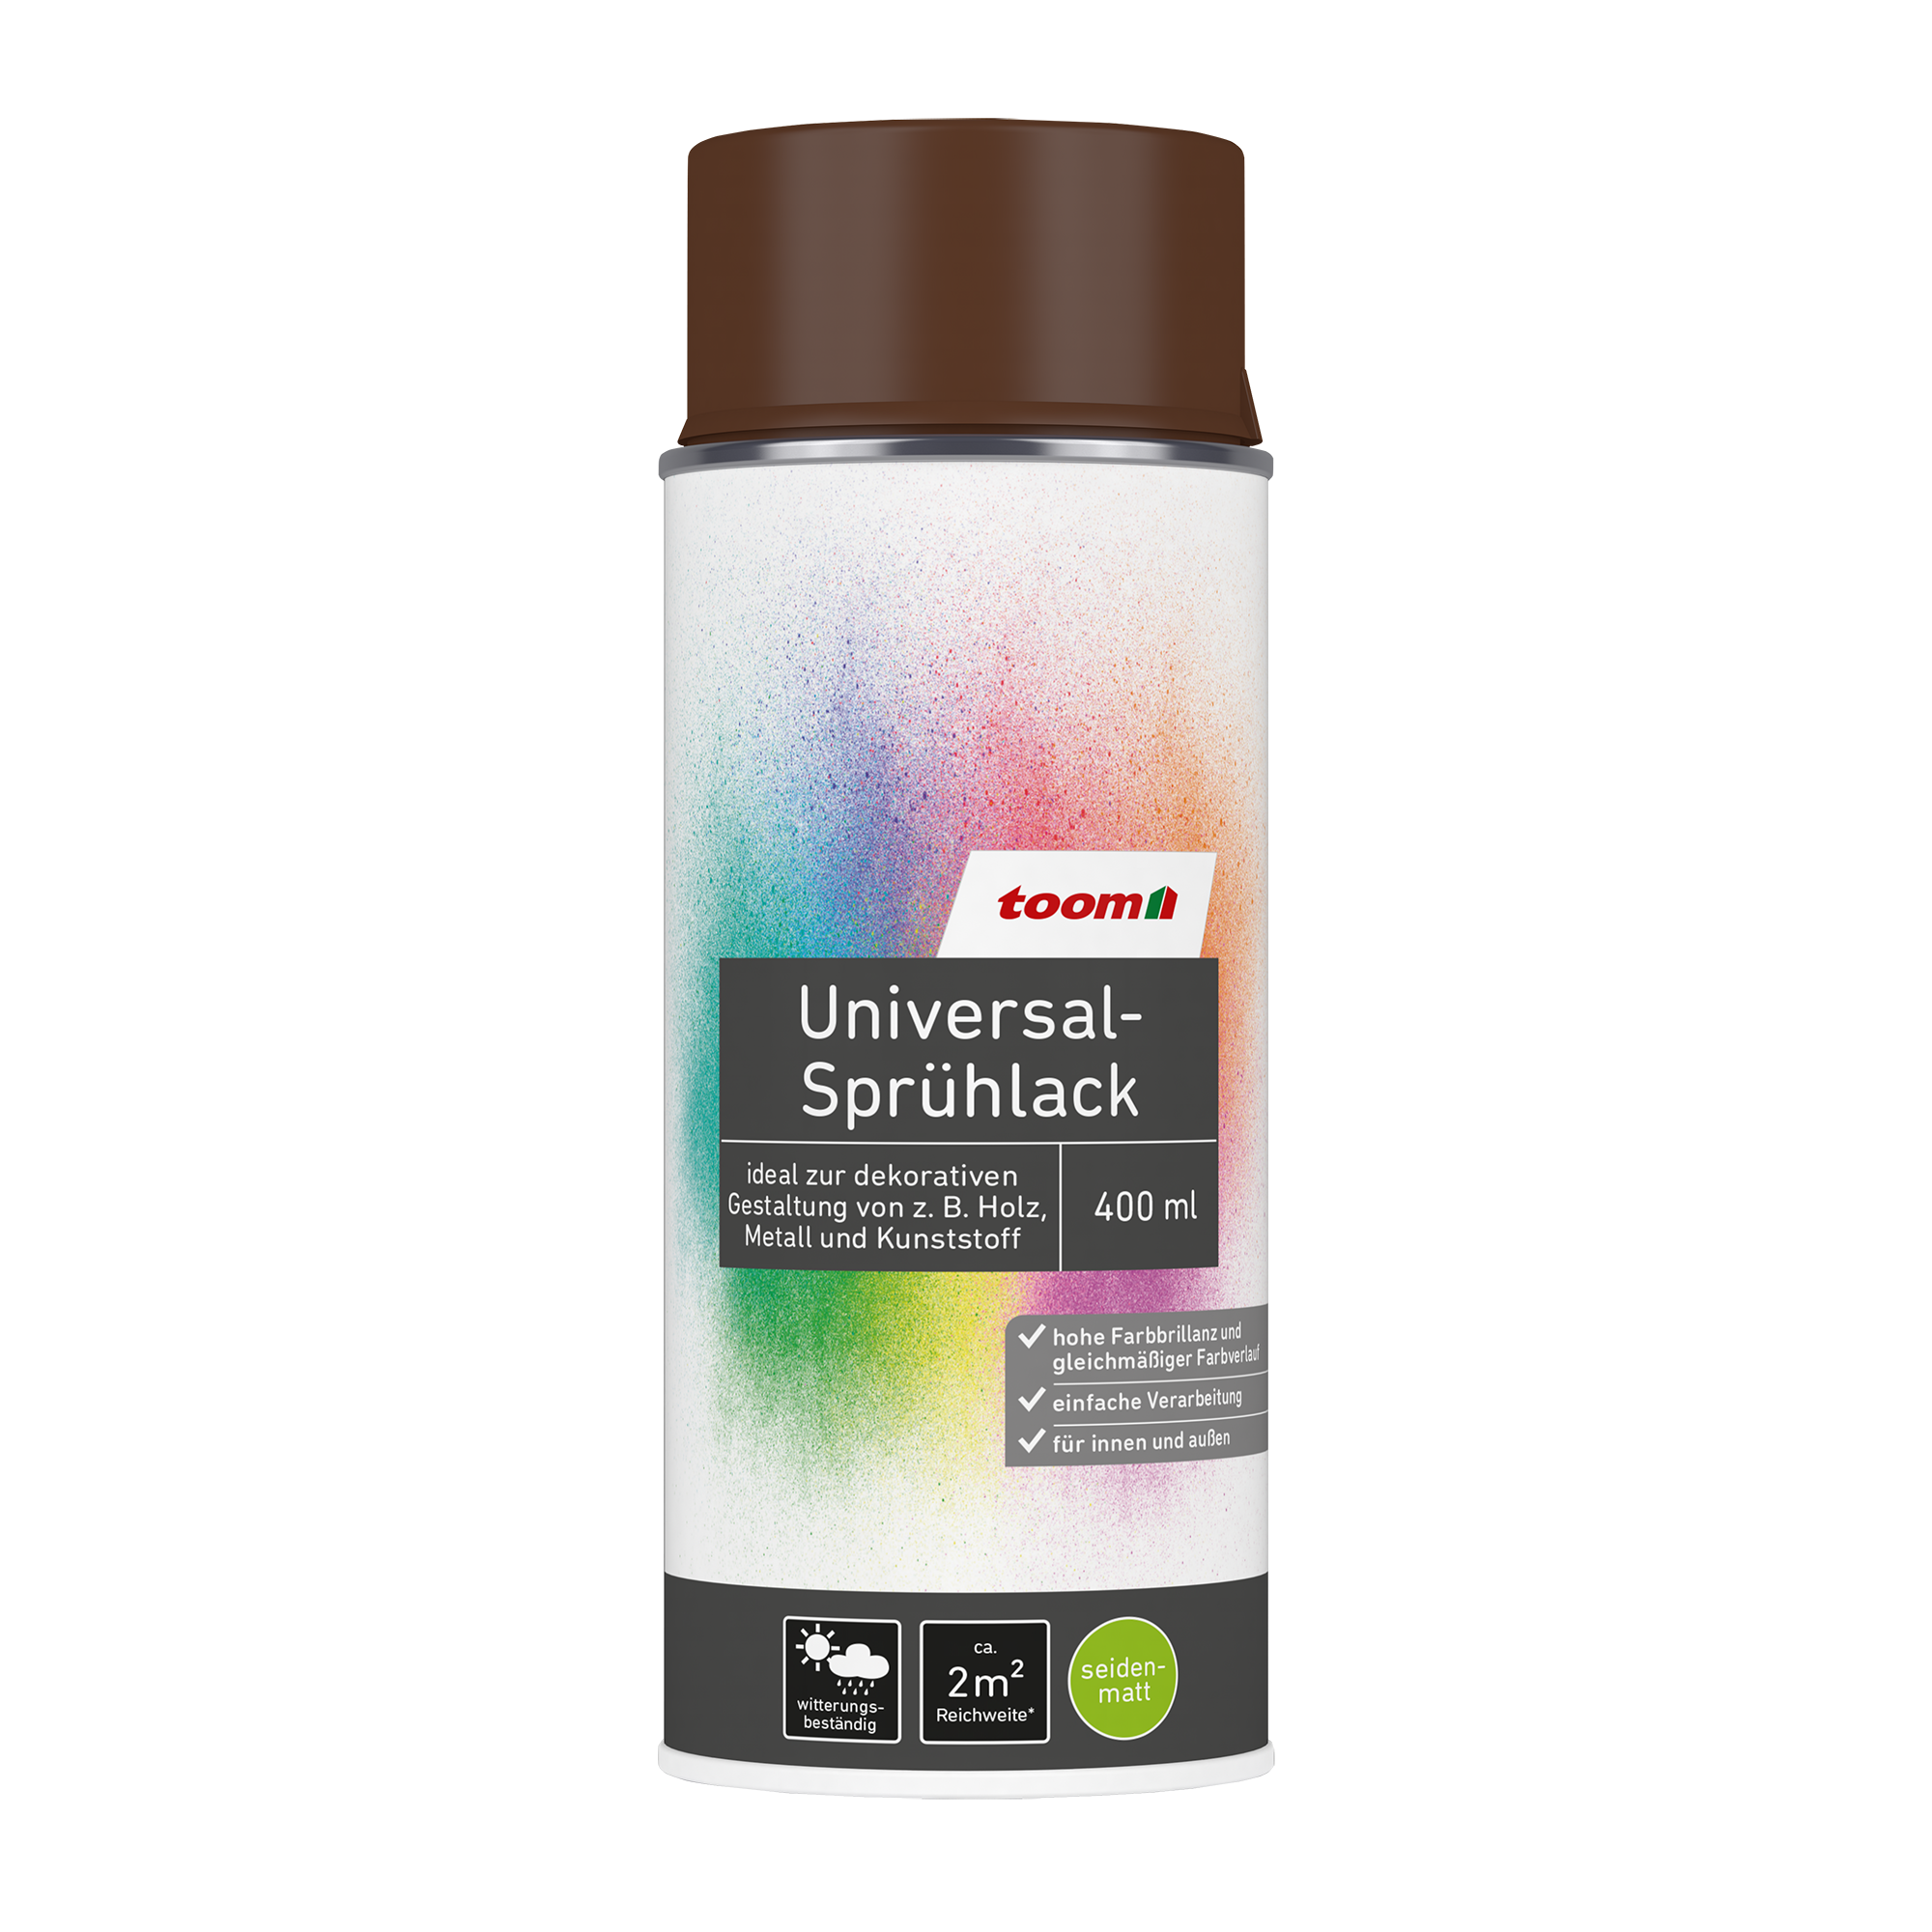 Universal-Sprühlack haselnussfarben seidenmatt 400 ml + product picture